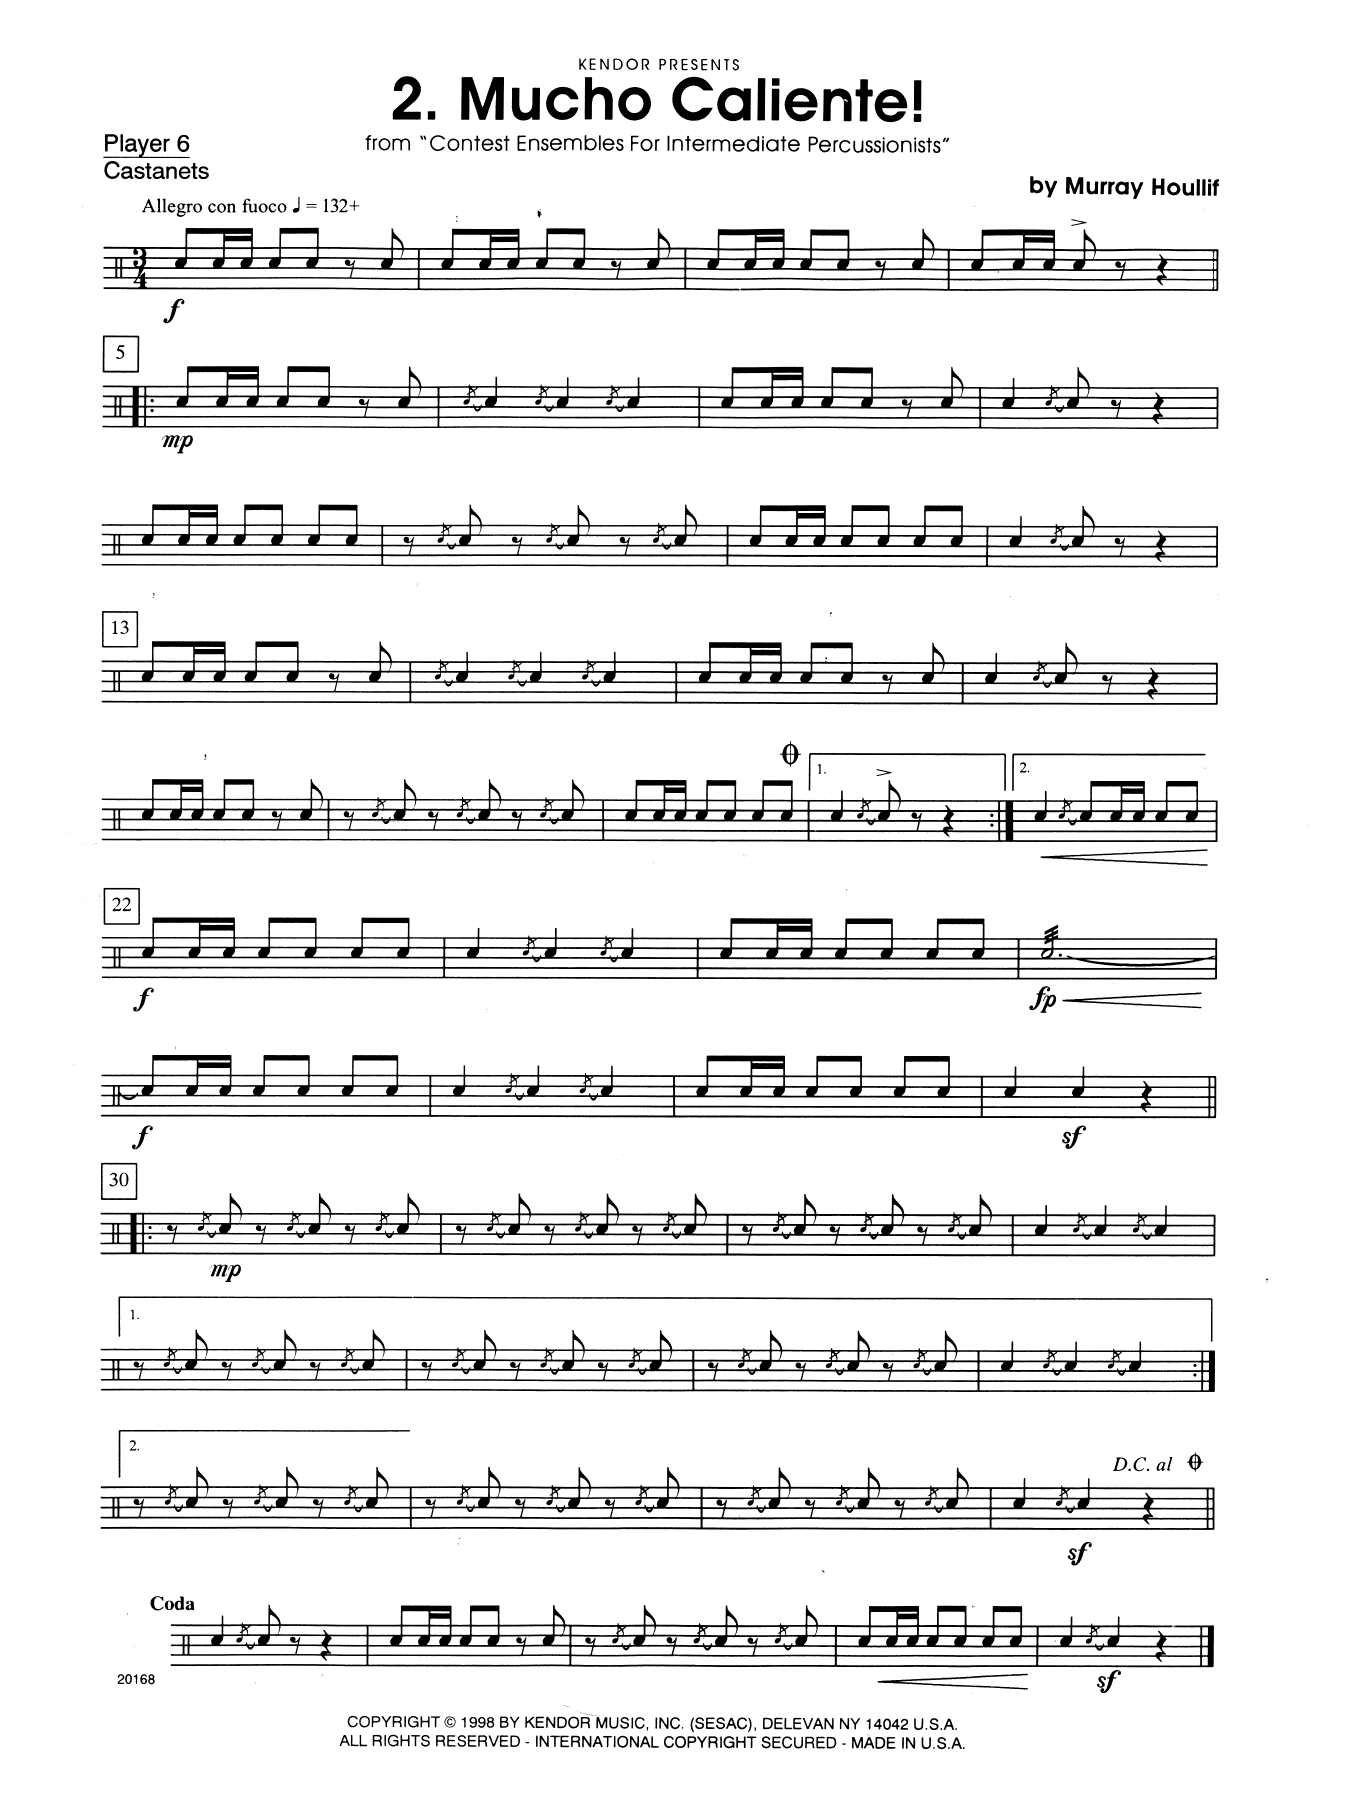 Download Murray Houllif Contest Ensembles For Intermediate Perc Sheet Music